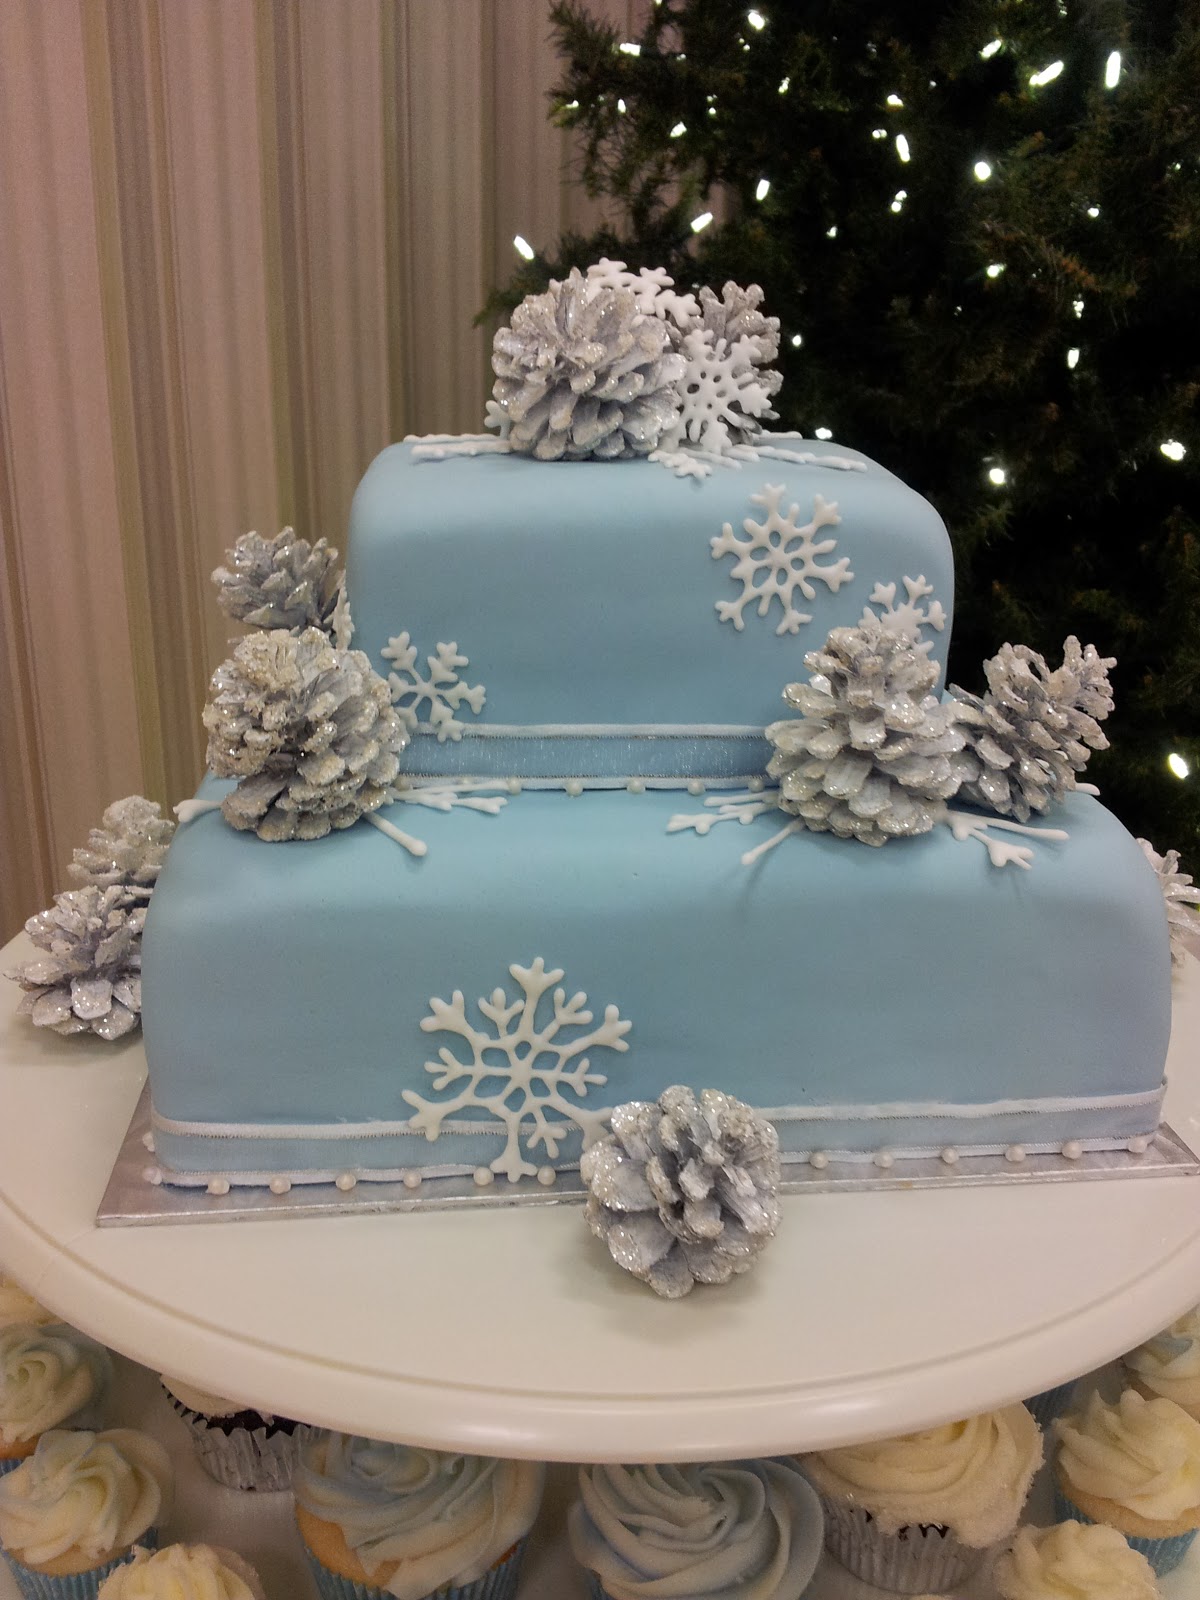 Kiddles 'N Bits Winter Wonderland Wedding cake